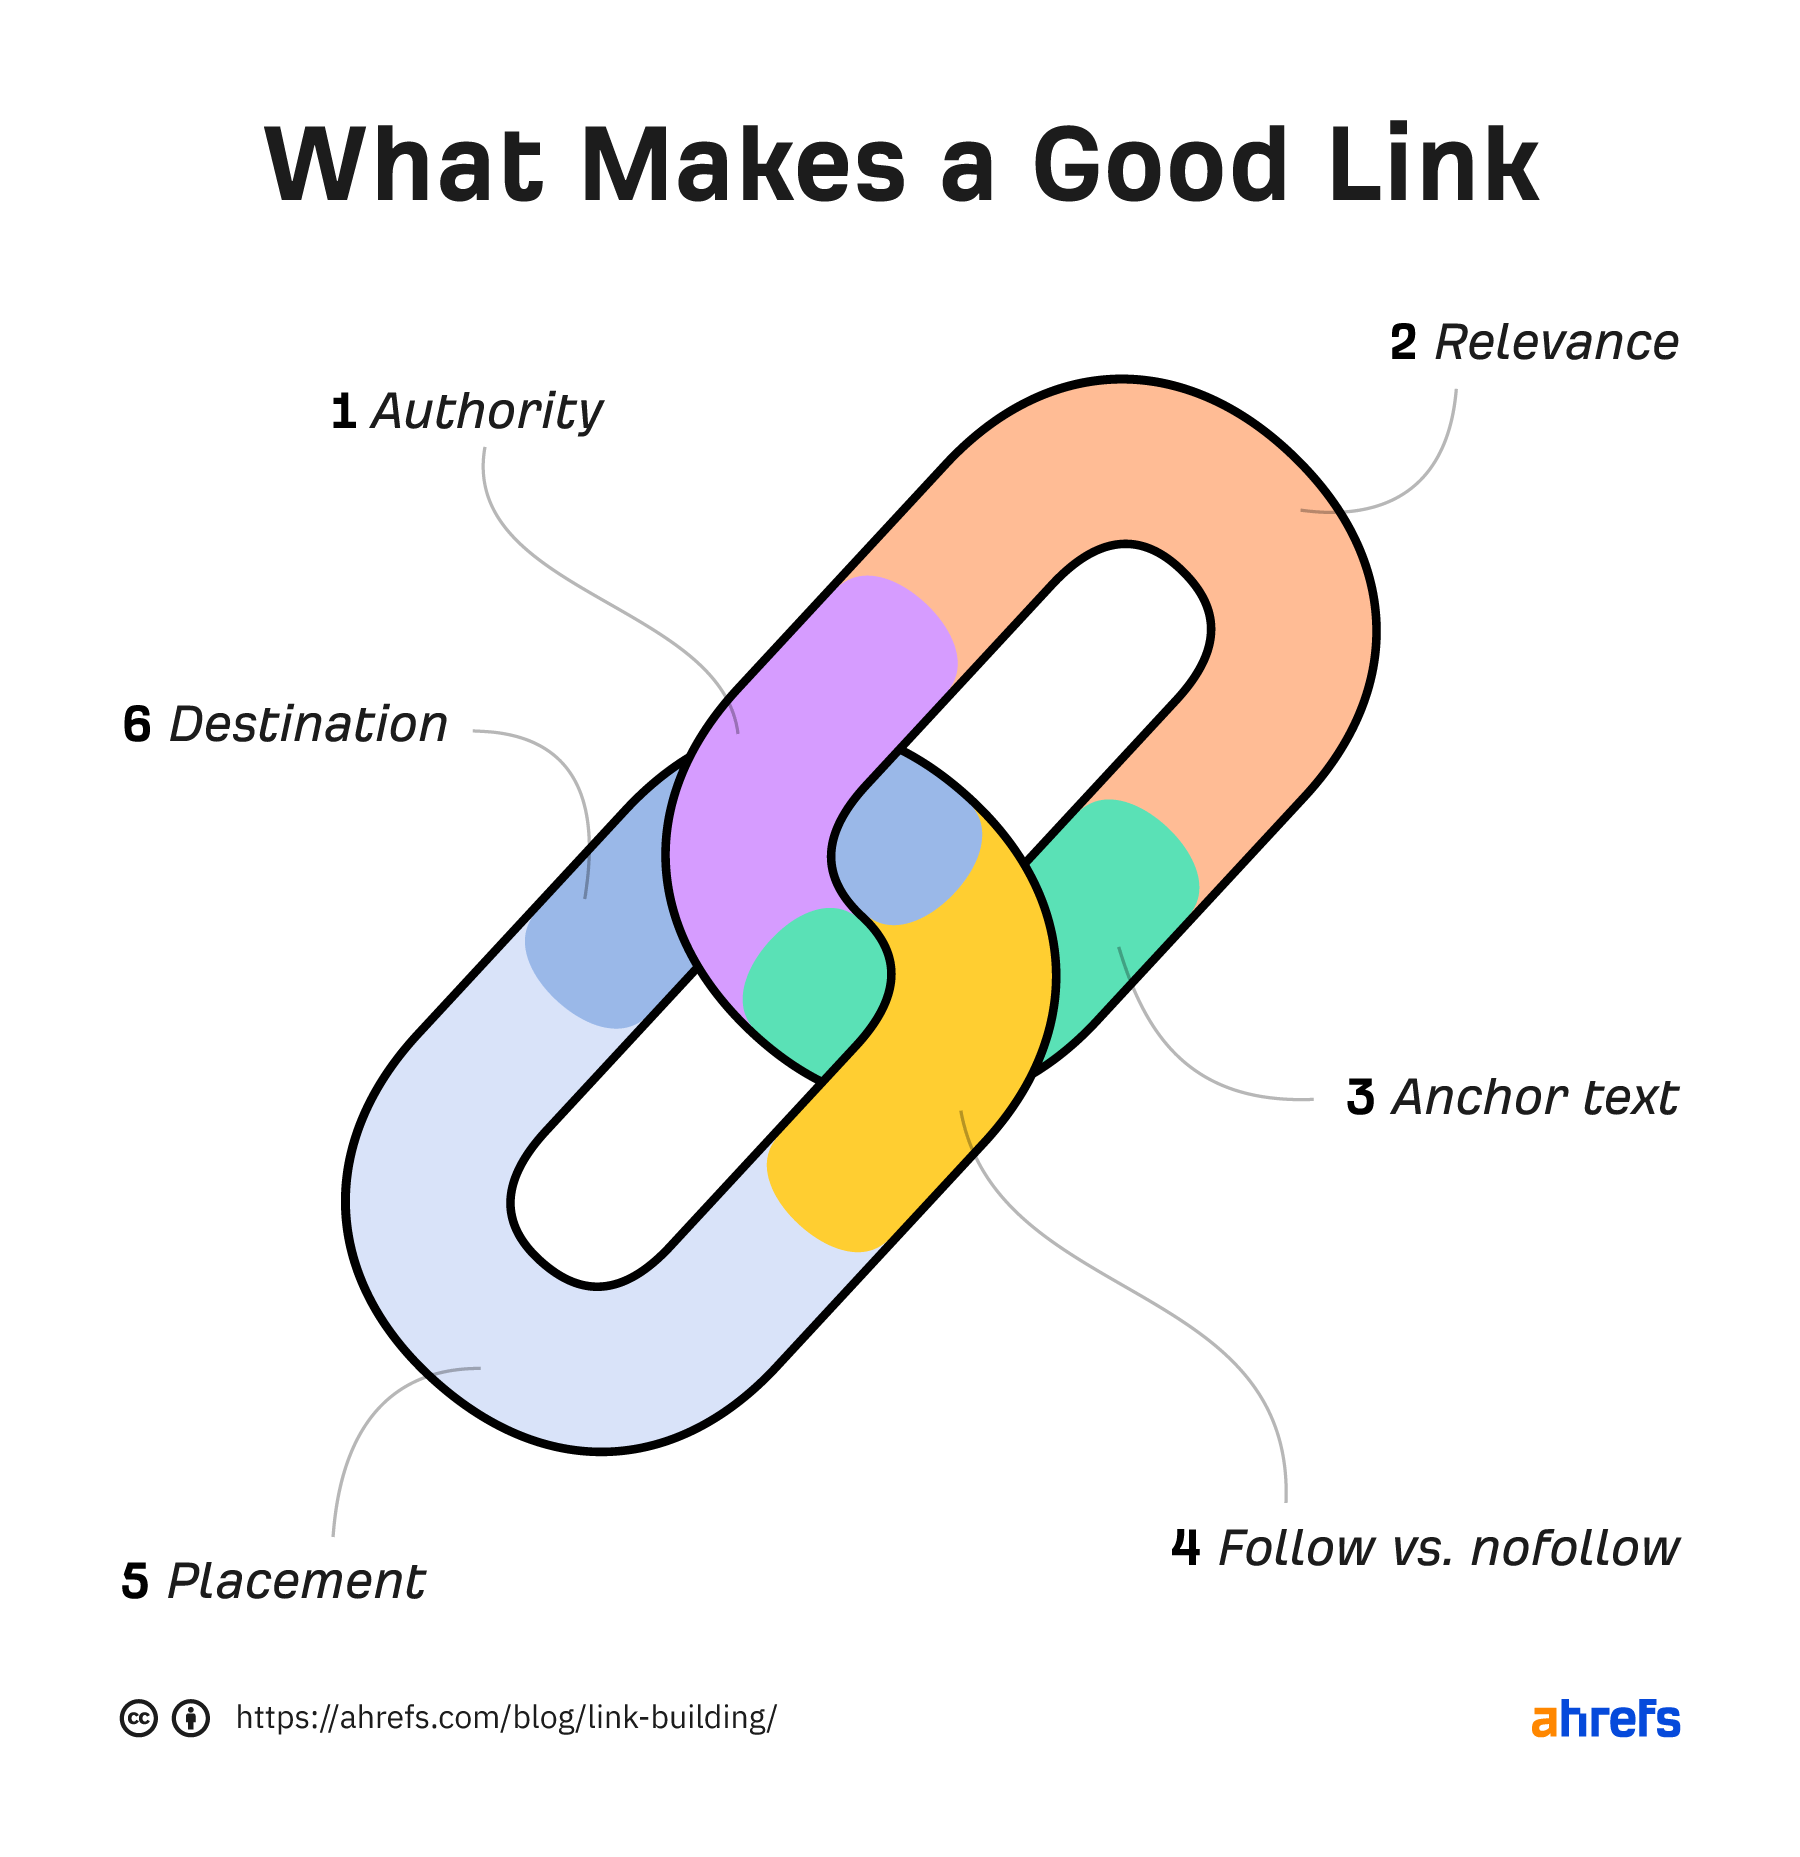 Six aspects of a good link